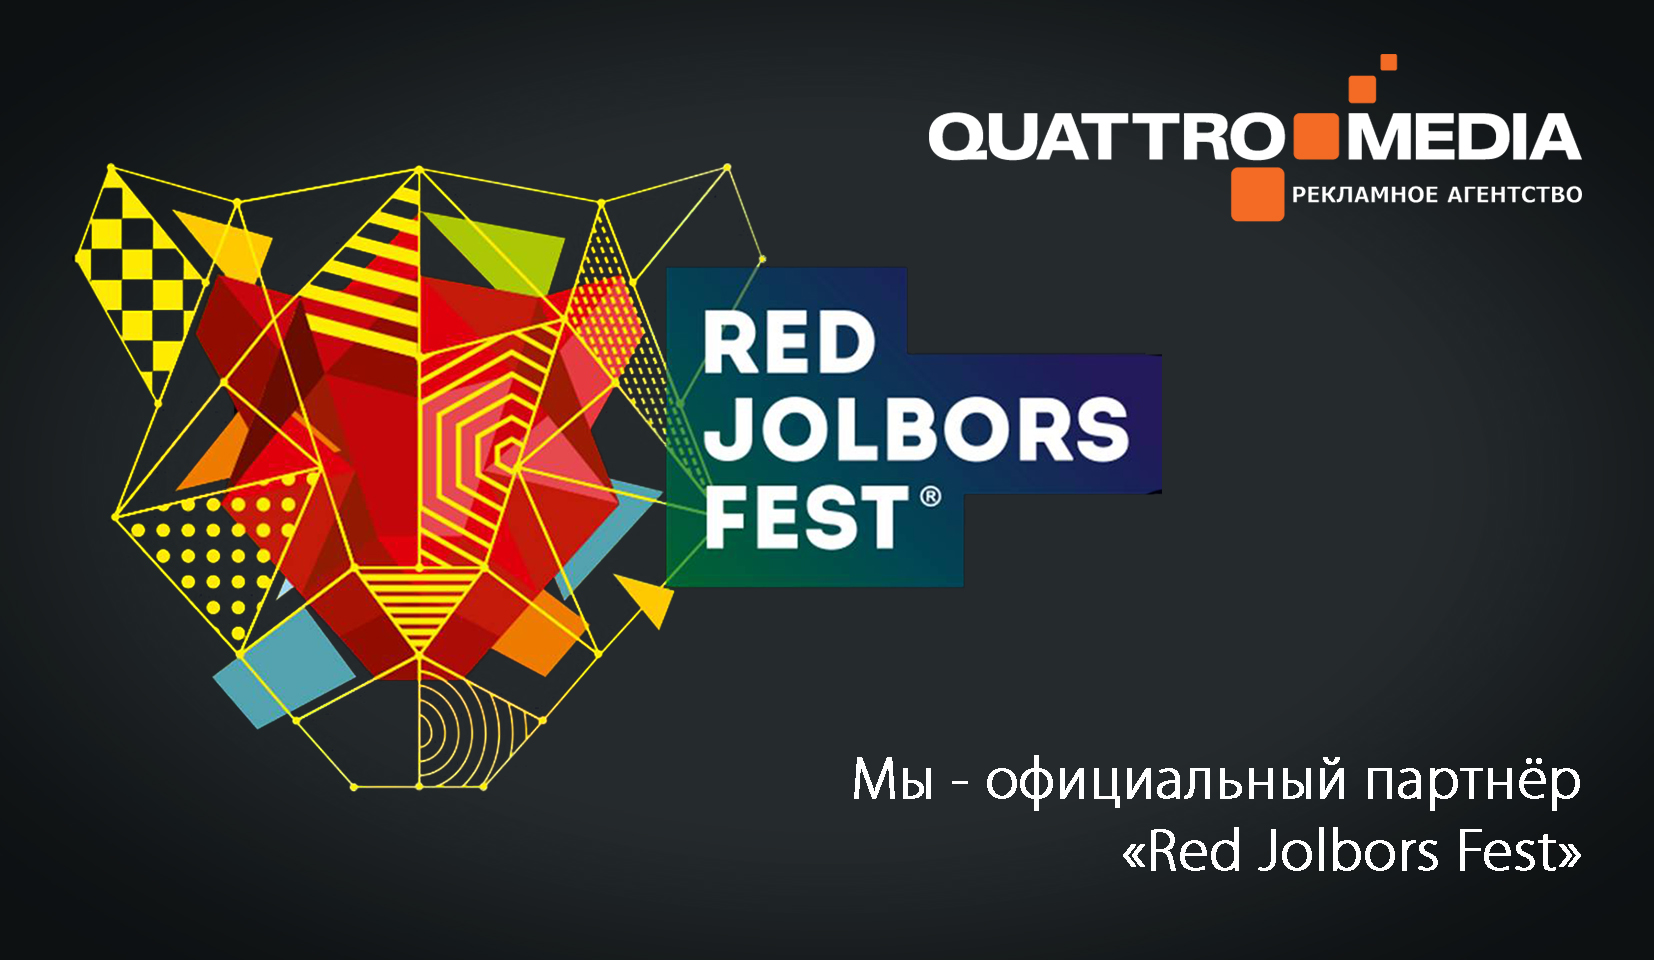 "Quattro media bishkek" - официальный партнер Red Jolbors Fest